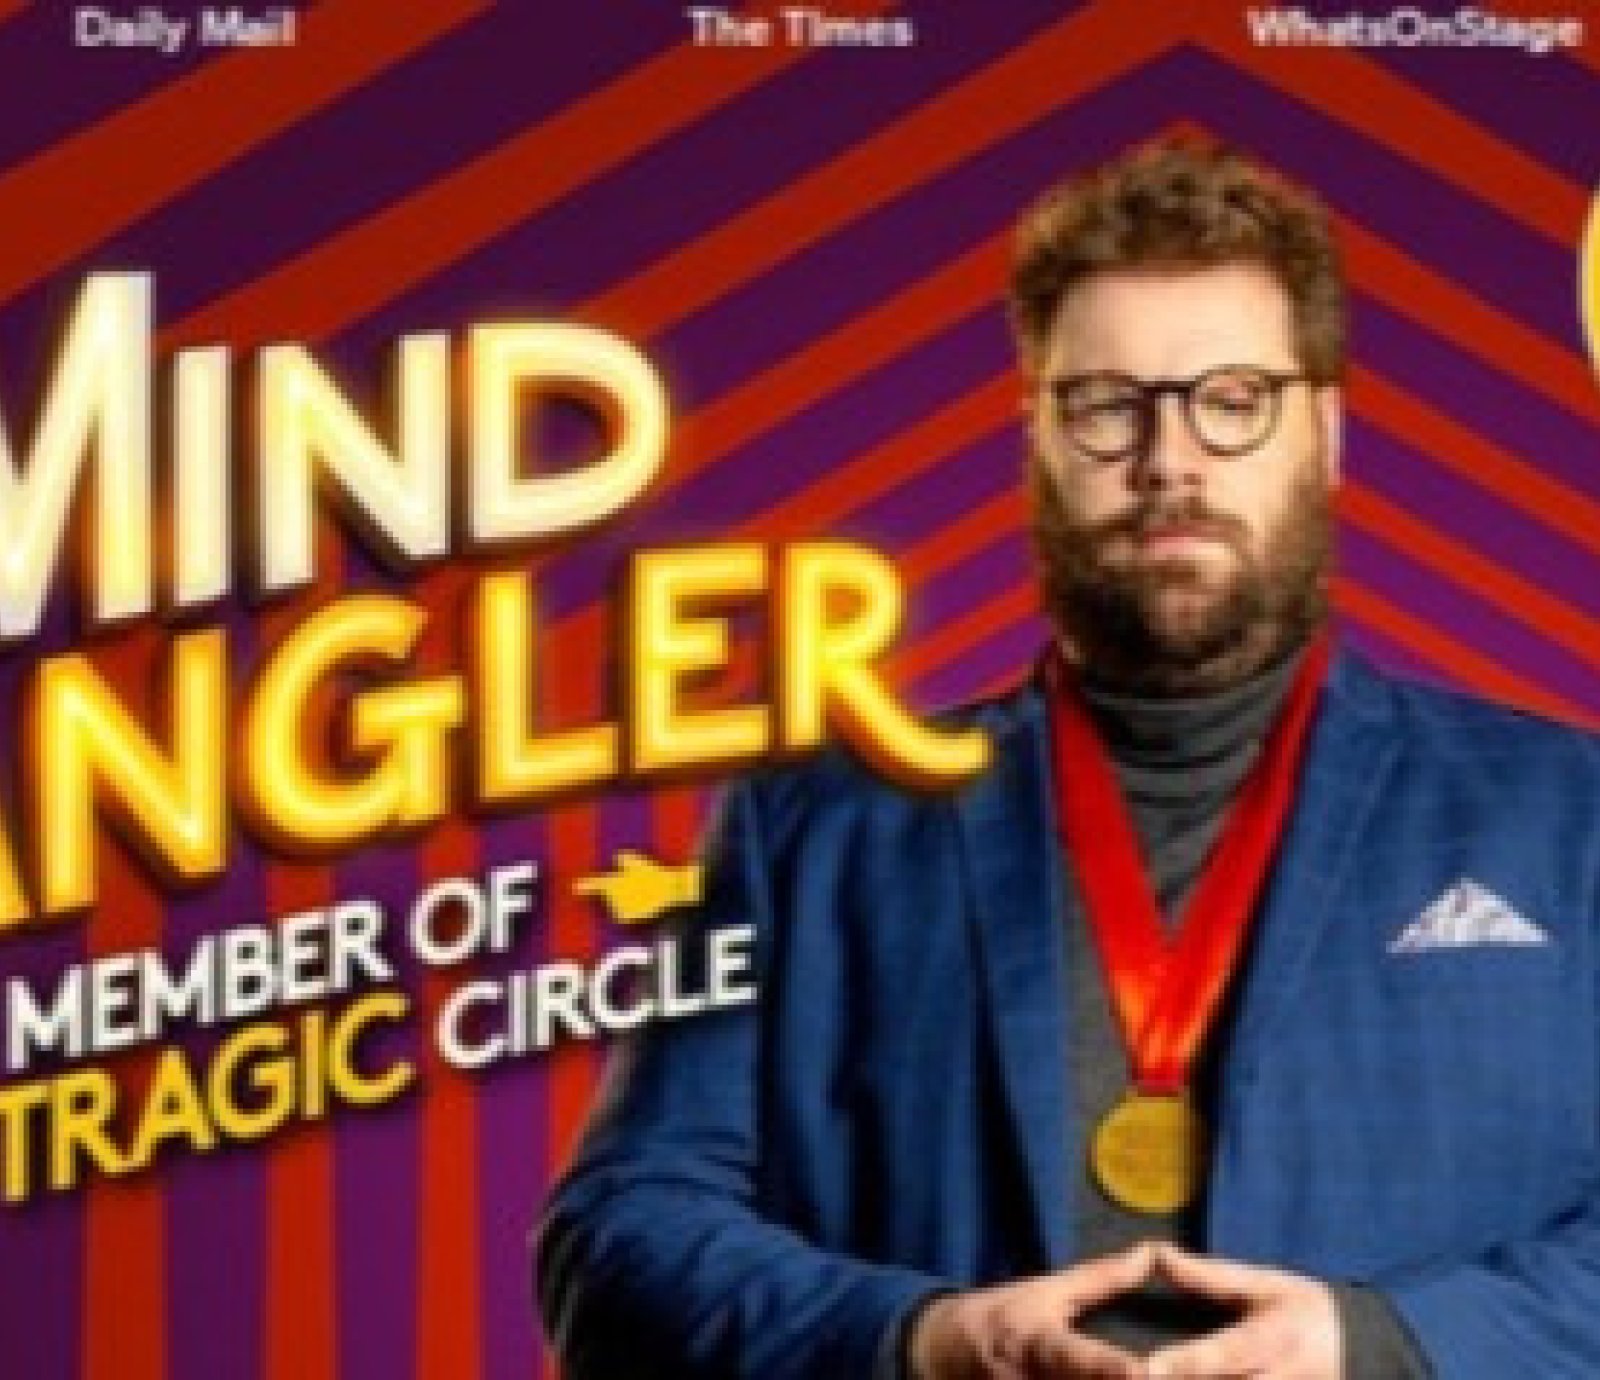 Mind Mangler: Member Of The Tragic Circle